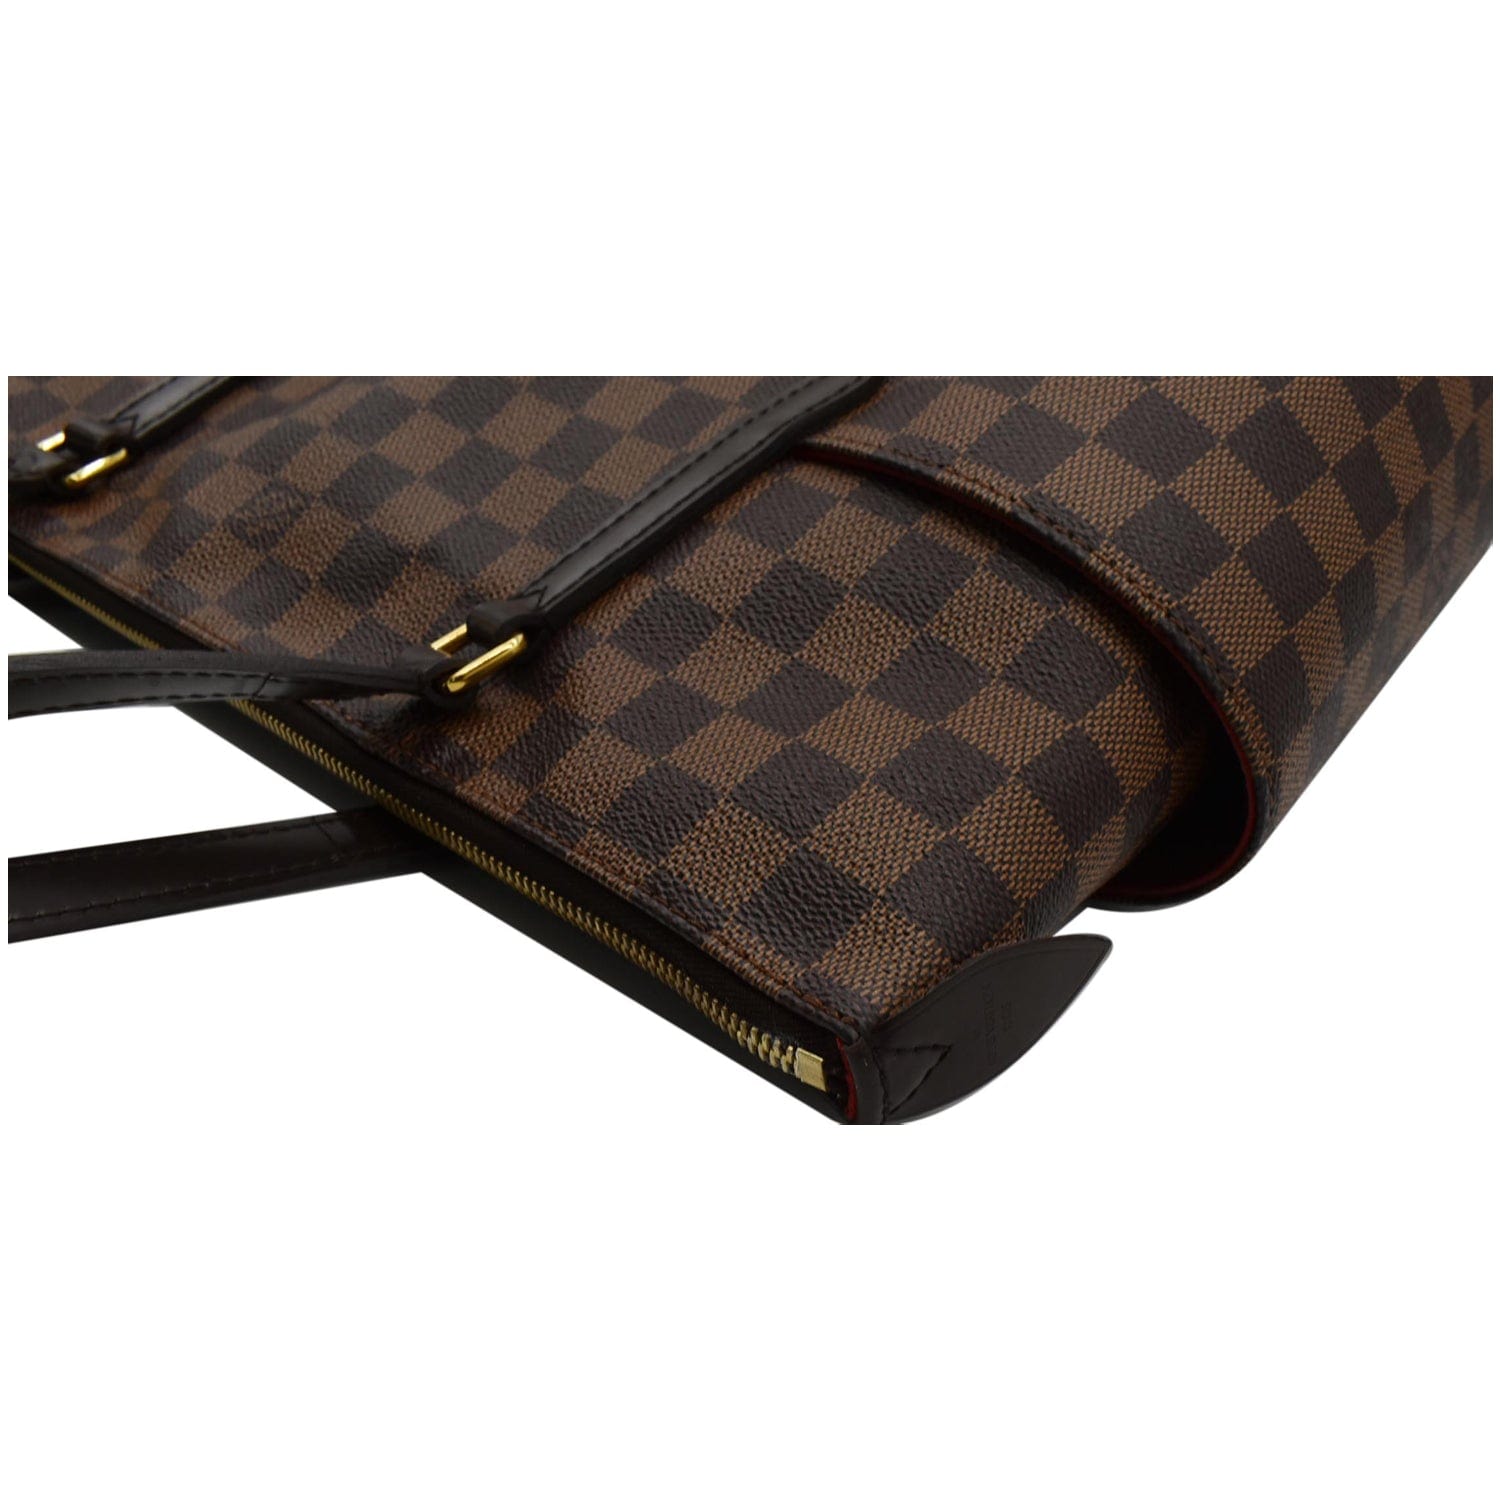 Louis Vuitton Totally MM Damier Ebene Shoulder Bag